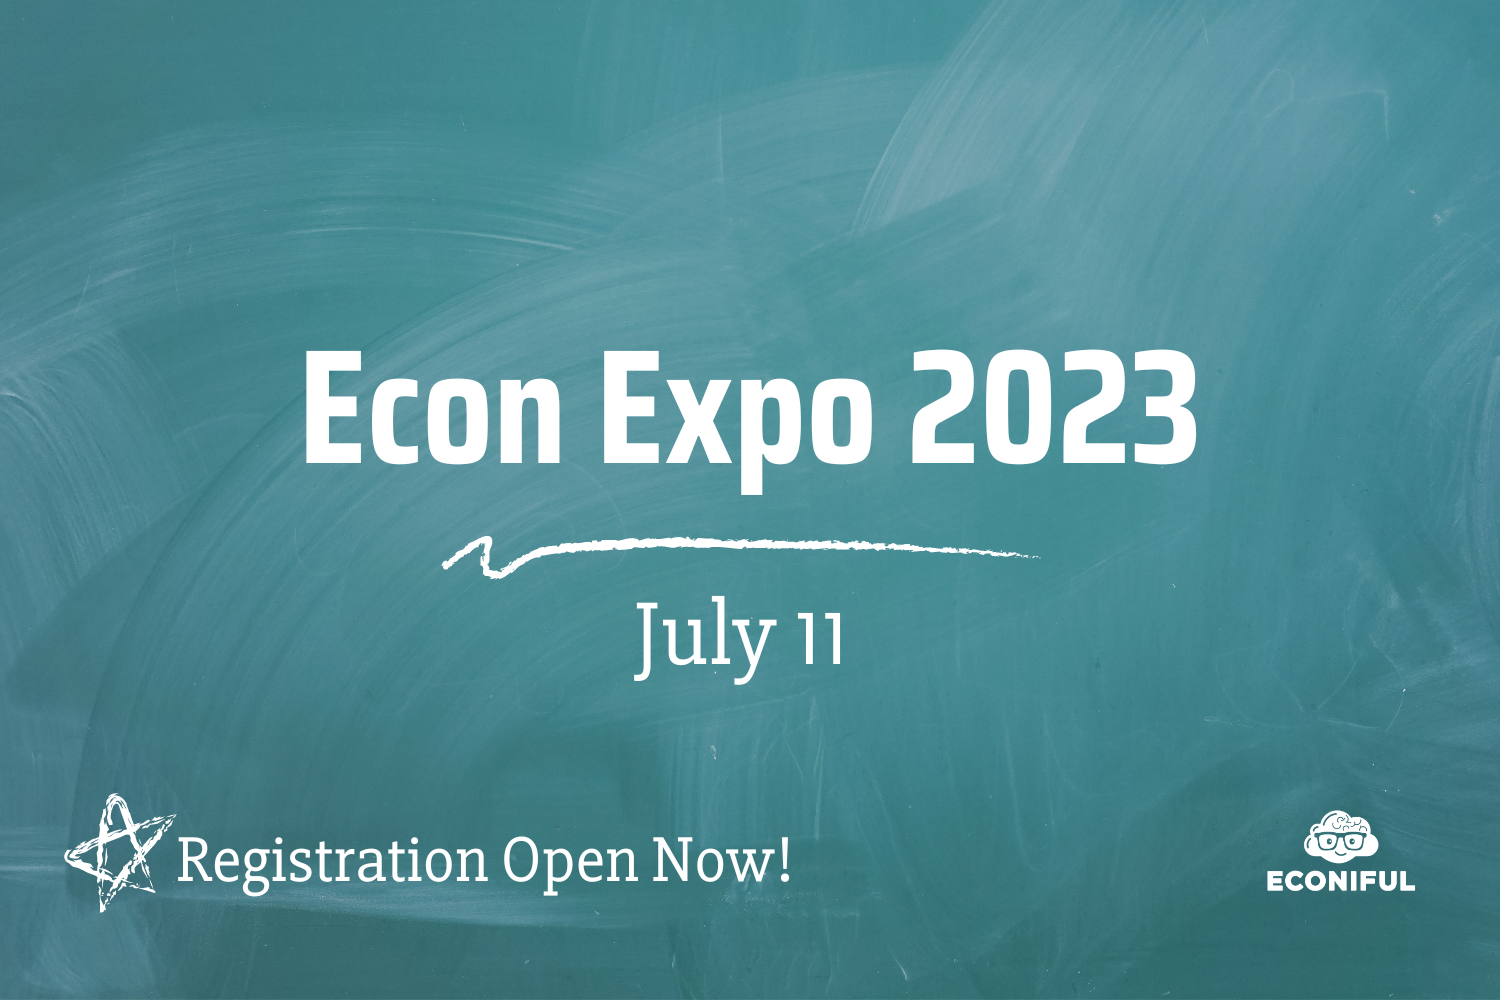 Graphic announcing Econ Expo 2023